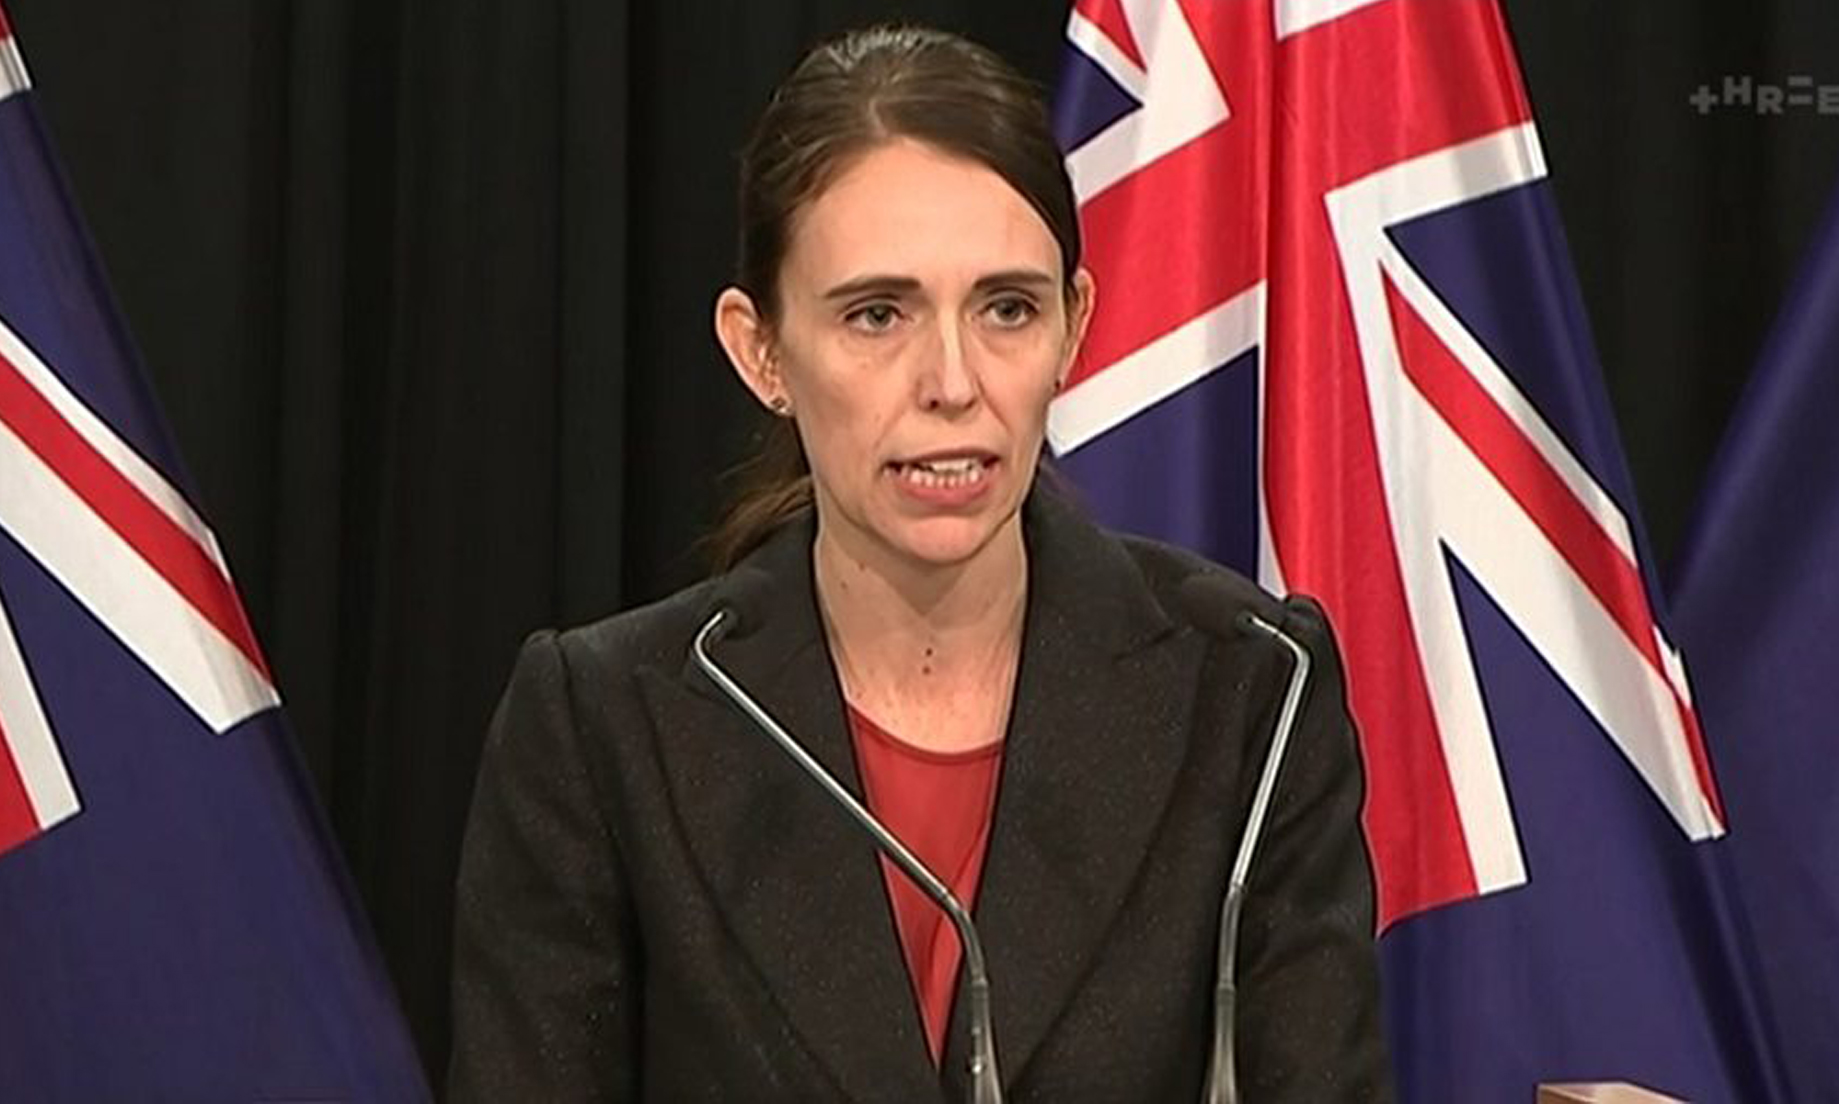 New Zealand’s Prime Minister announces ban on all assault rifles following massacre under strong gun laws